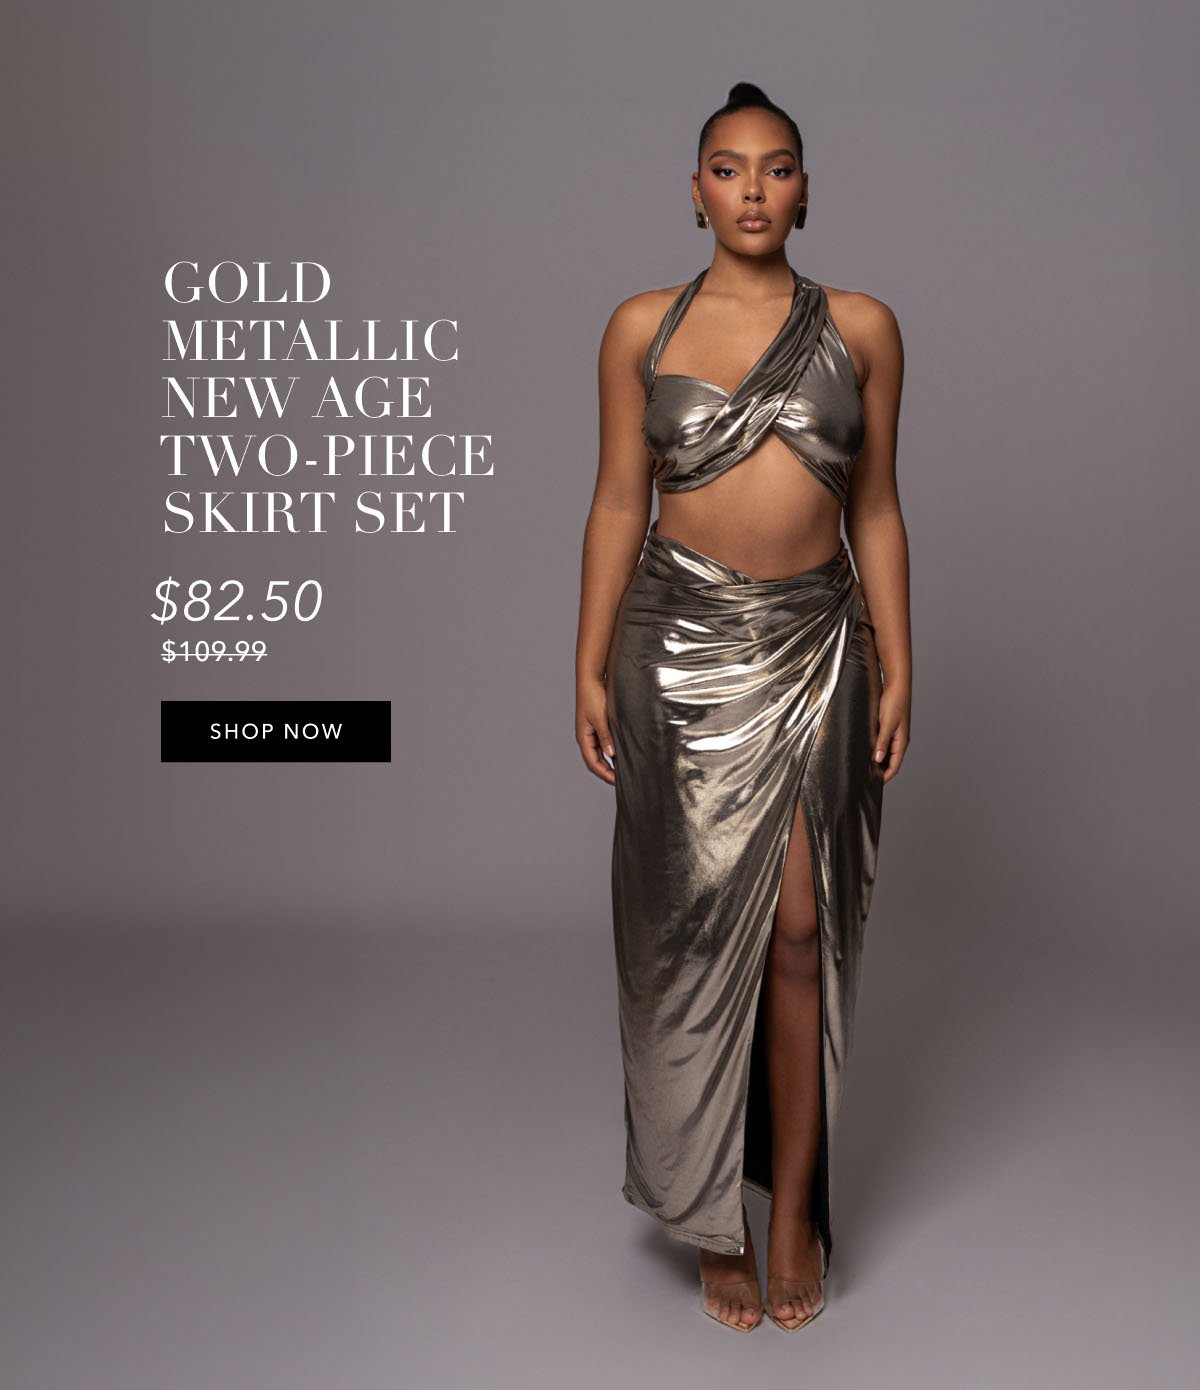 Gold Metallic New Age Two-Piece Skirt Set